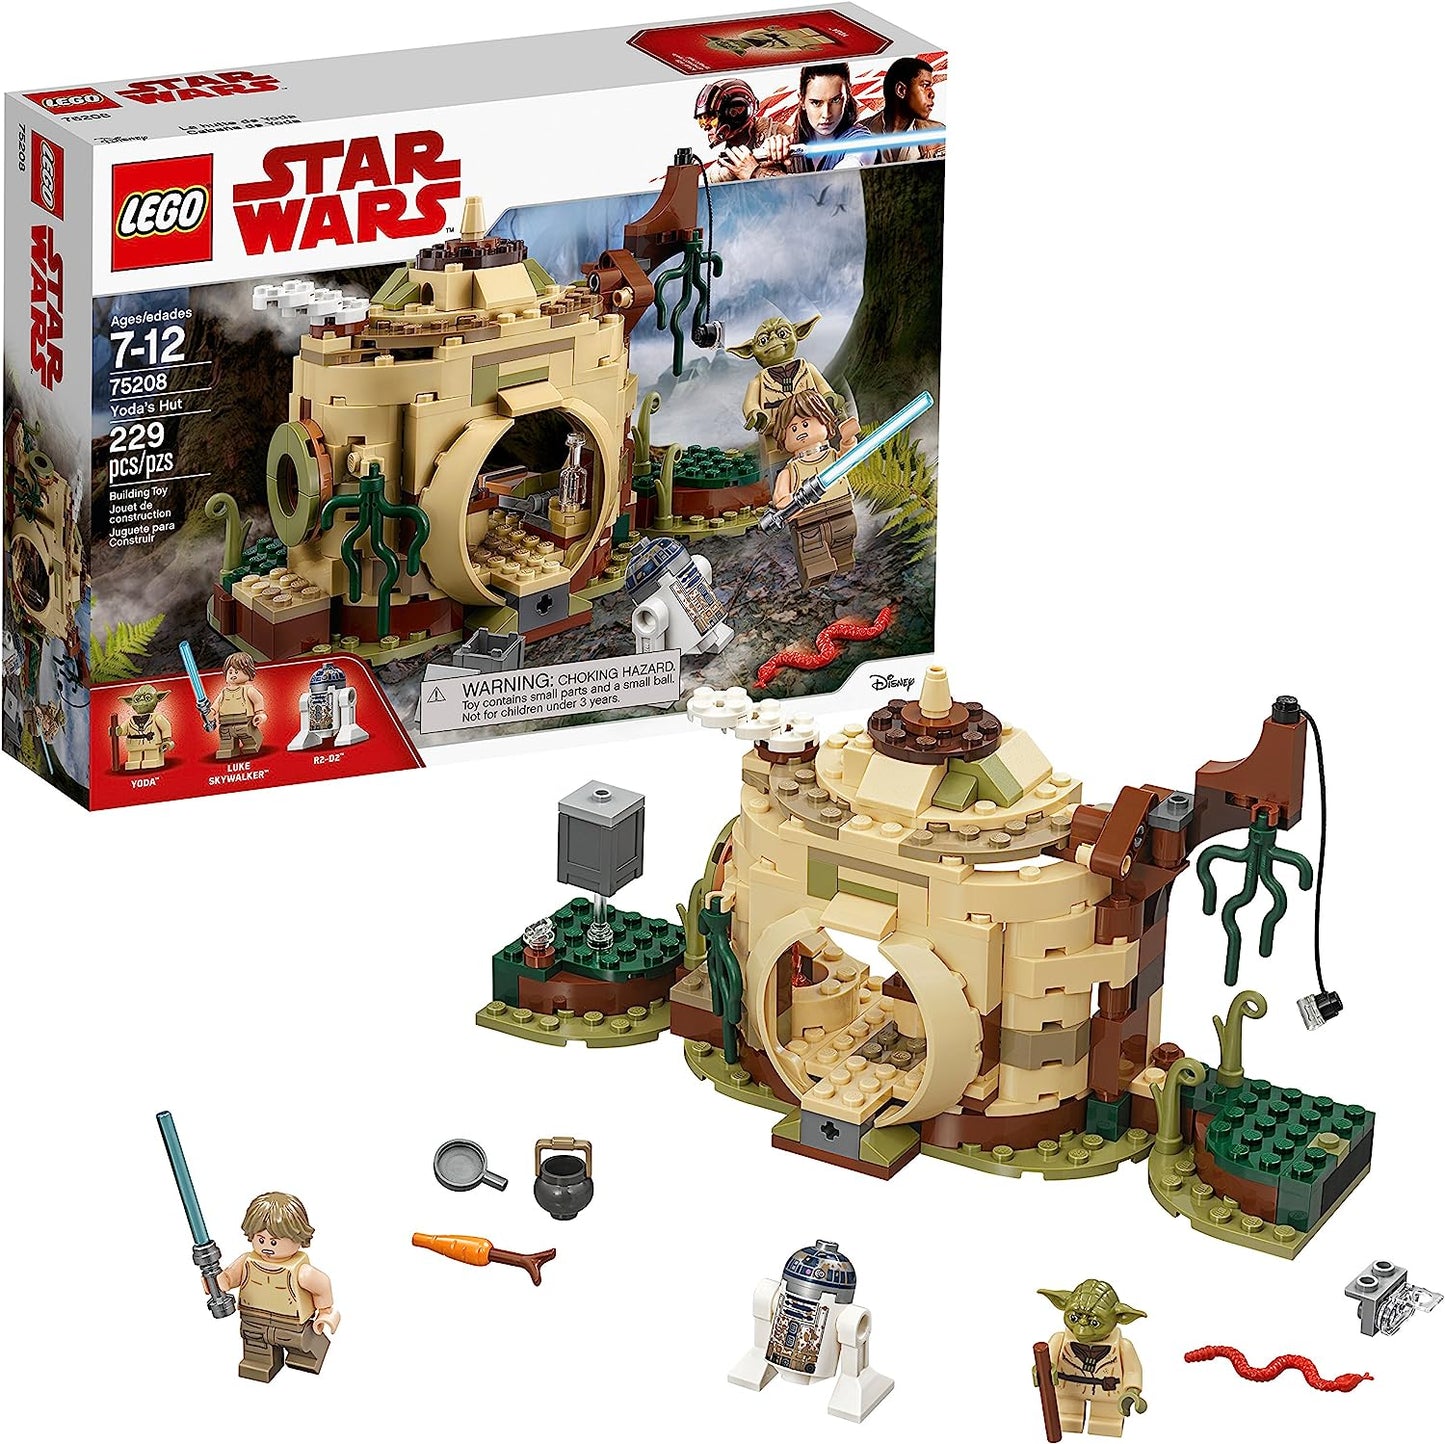 75208 Star Wars: The Empire Strikes Back Yoda’s Hut - CERTIFIED